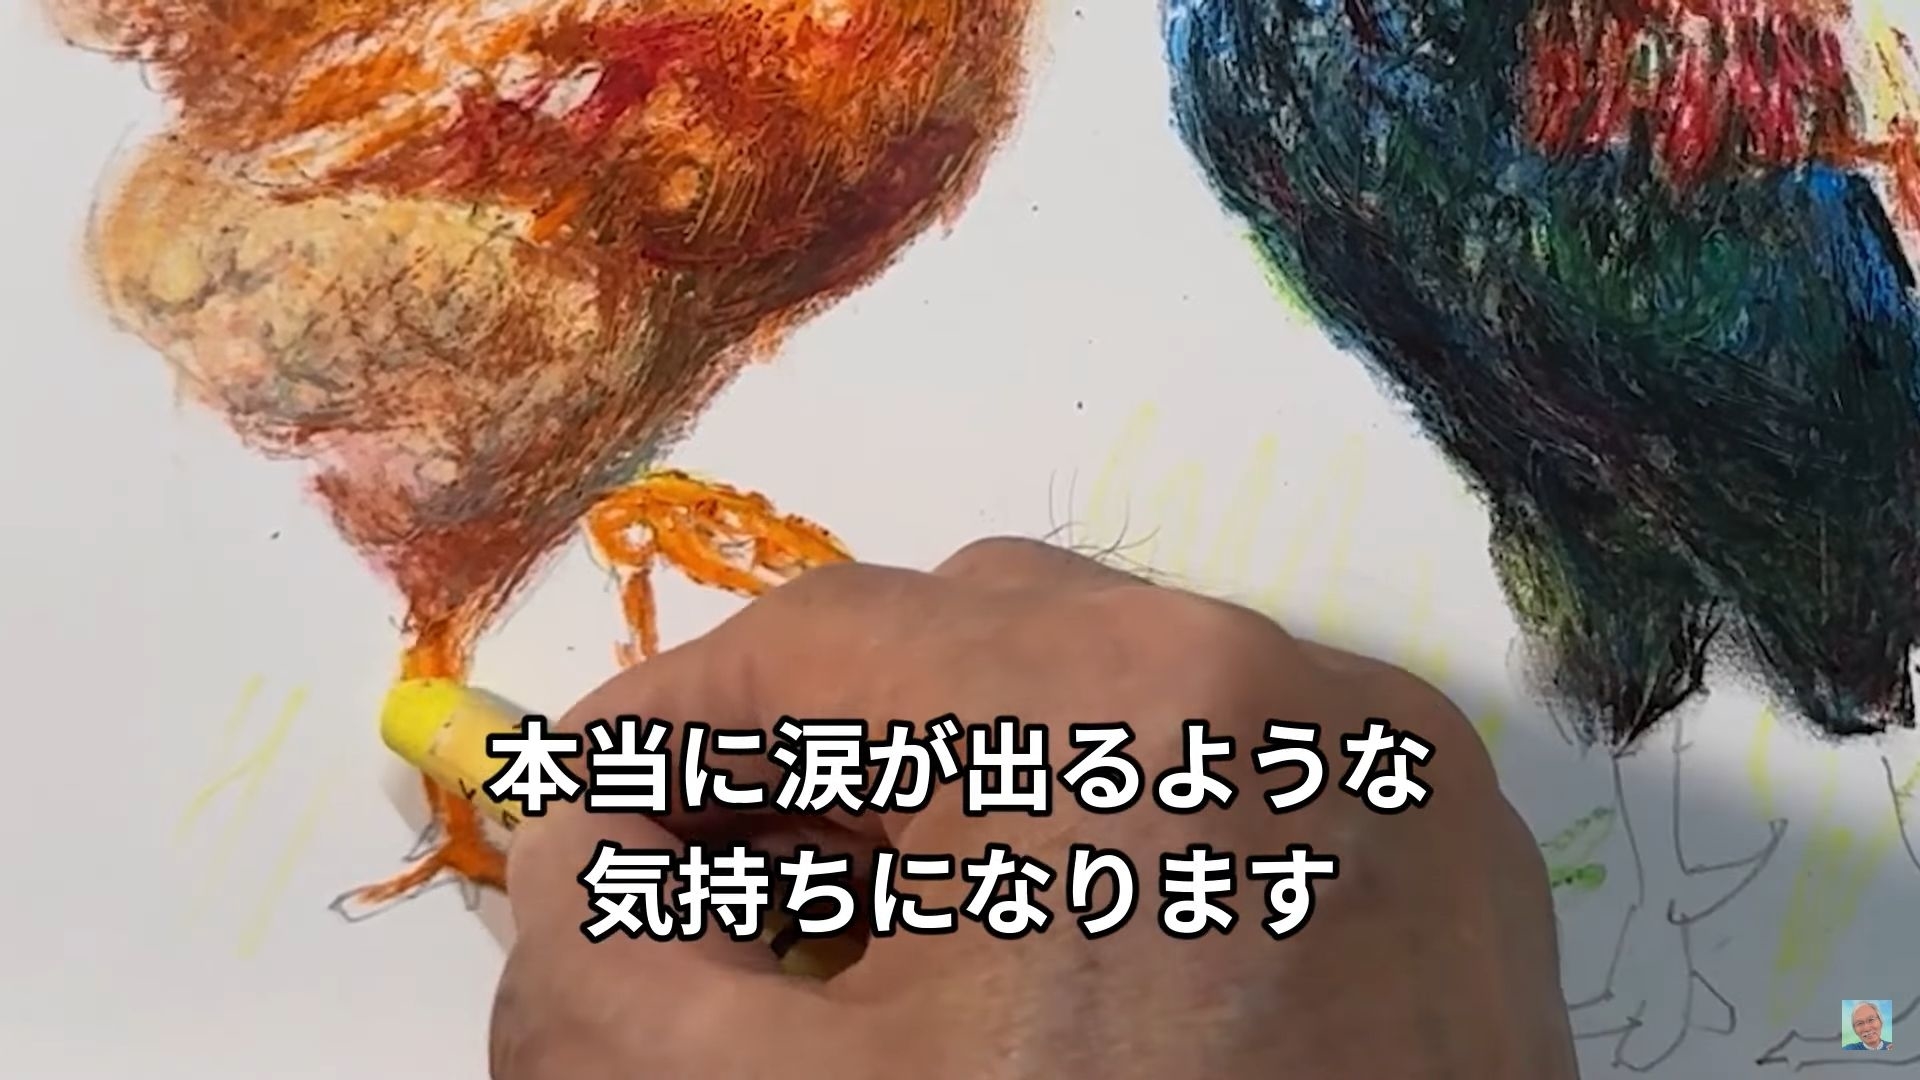 YouTube「Watercolor by Shibasaki 」より　終戦後を語るおじいちゃん